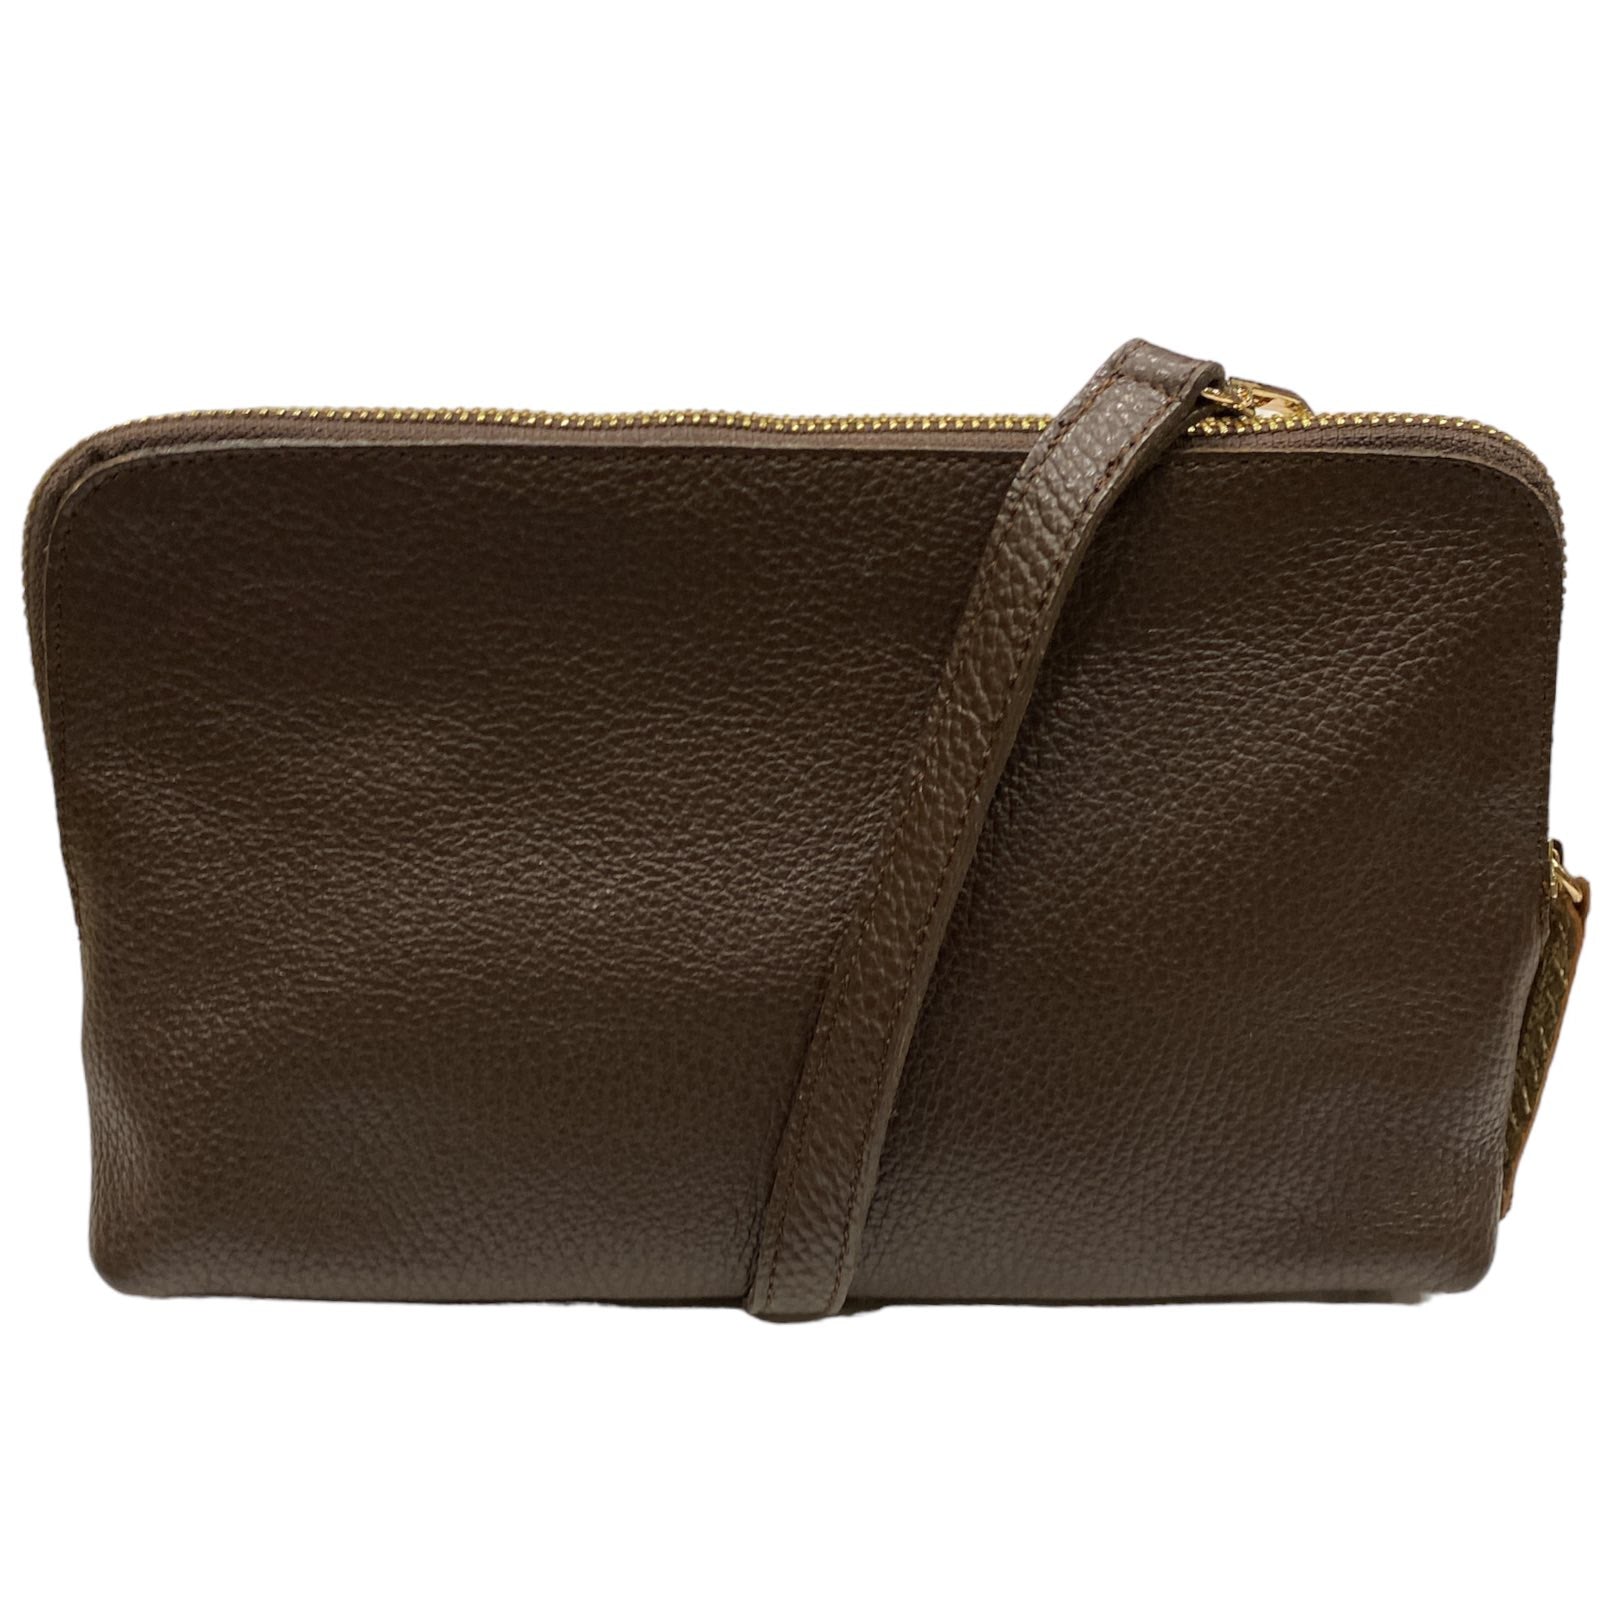 Box XL. Brown leather messenger bag